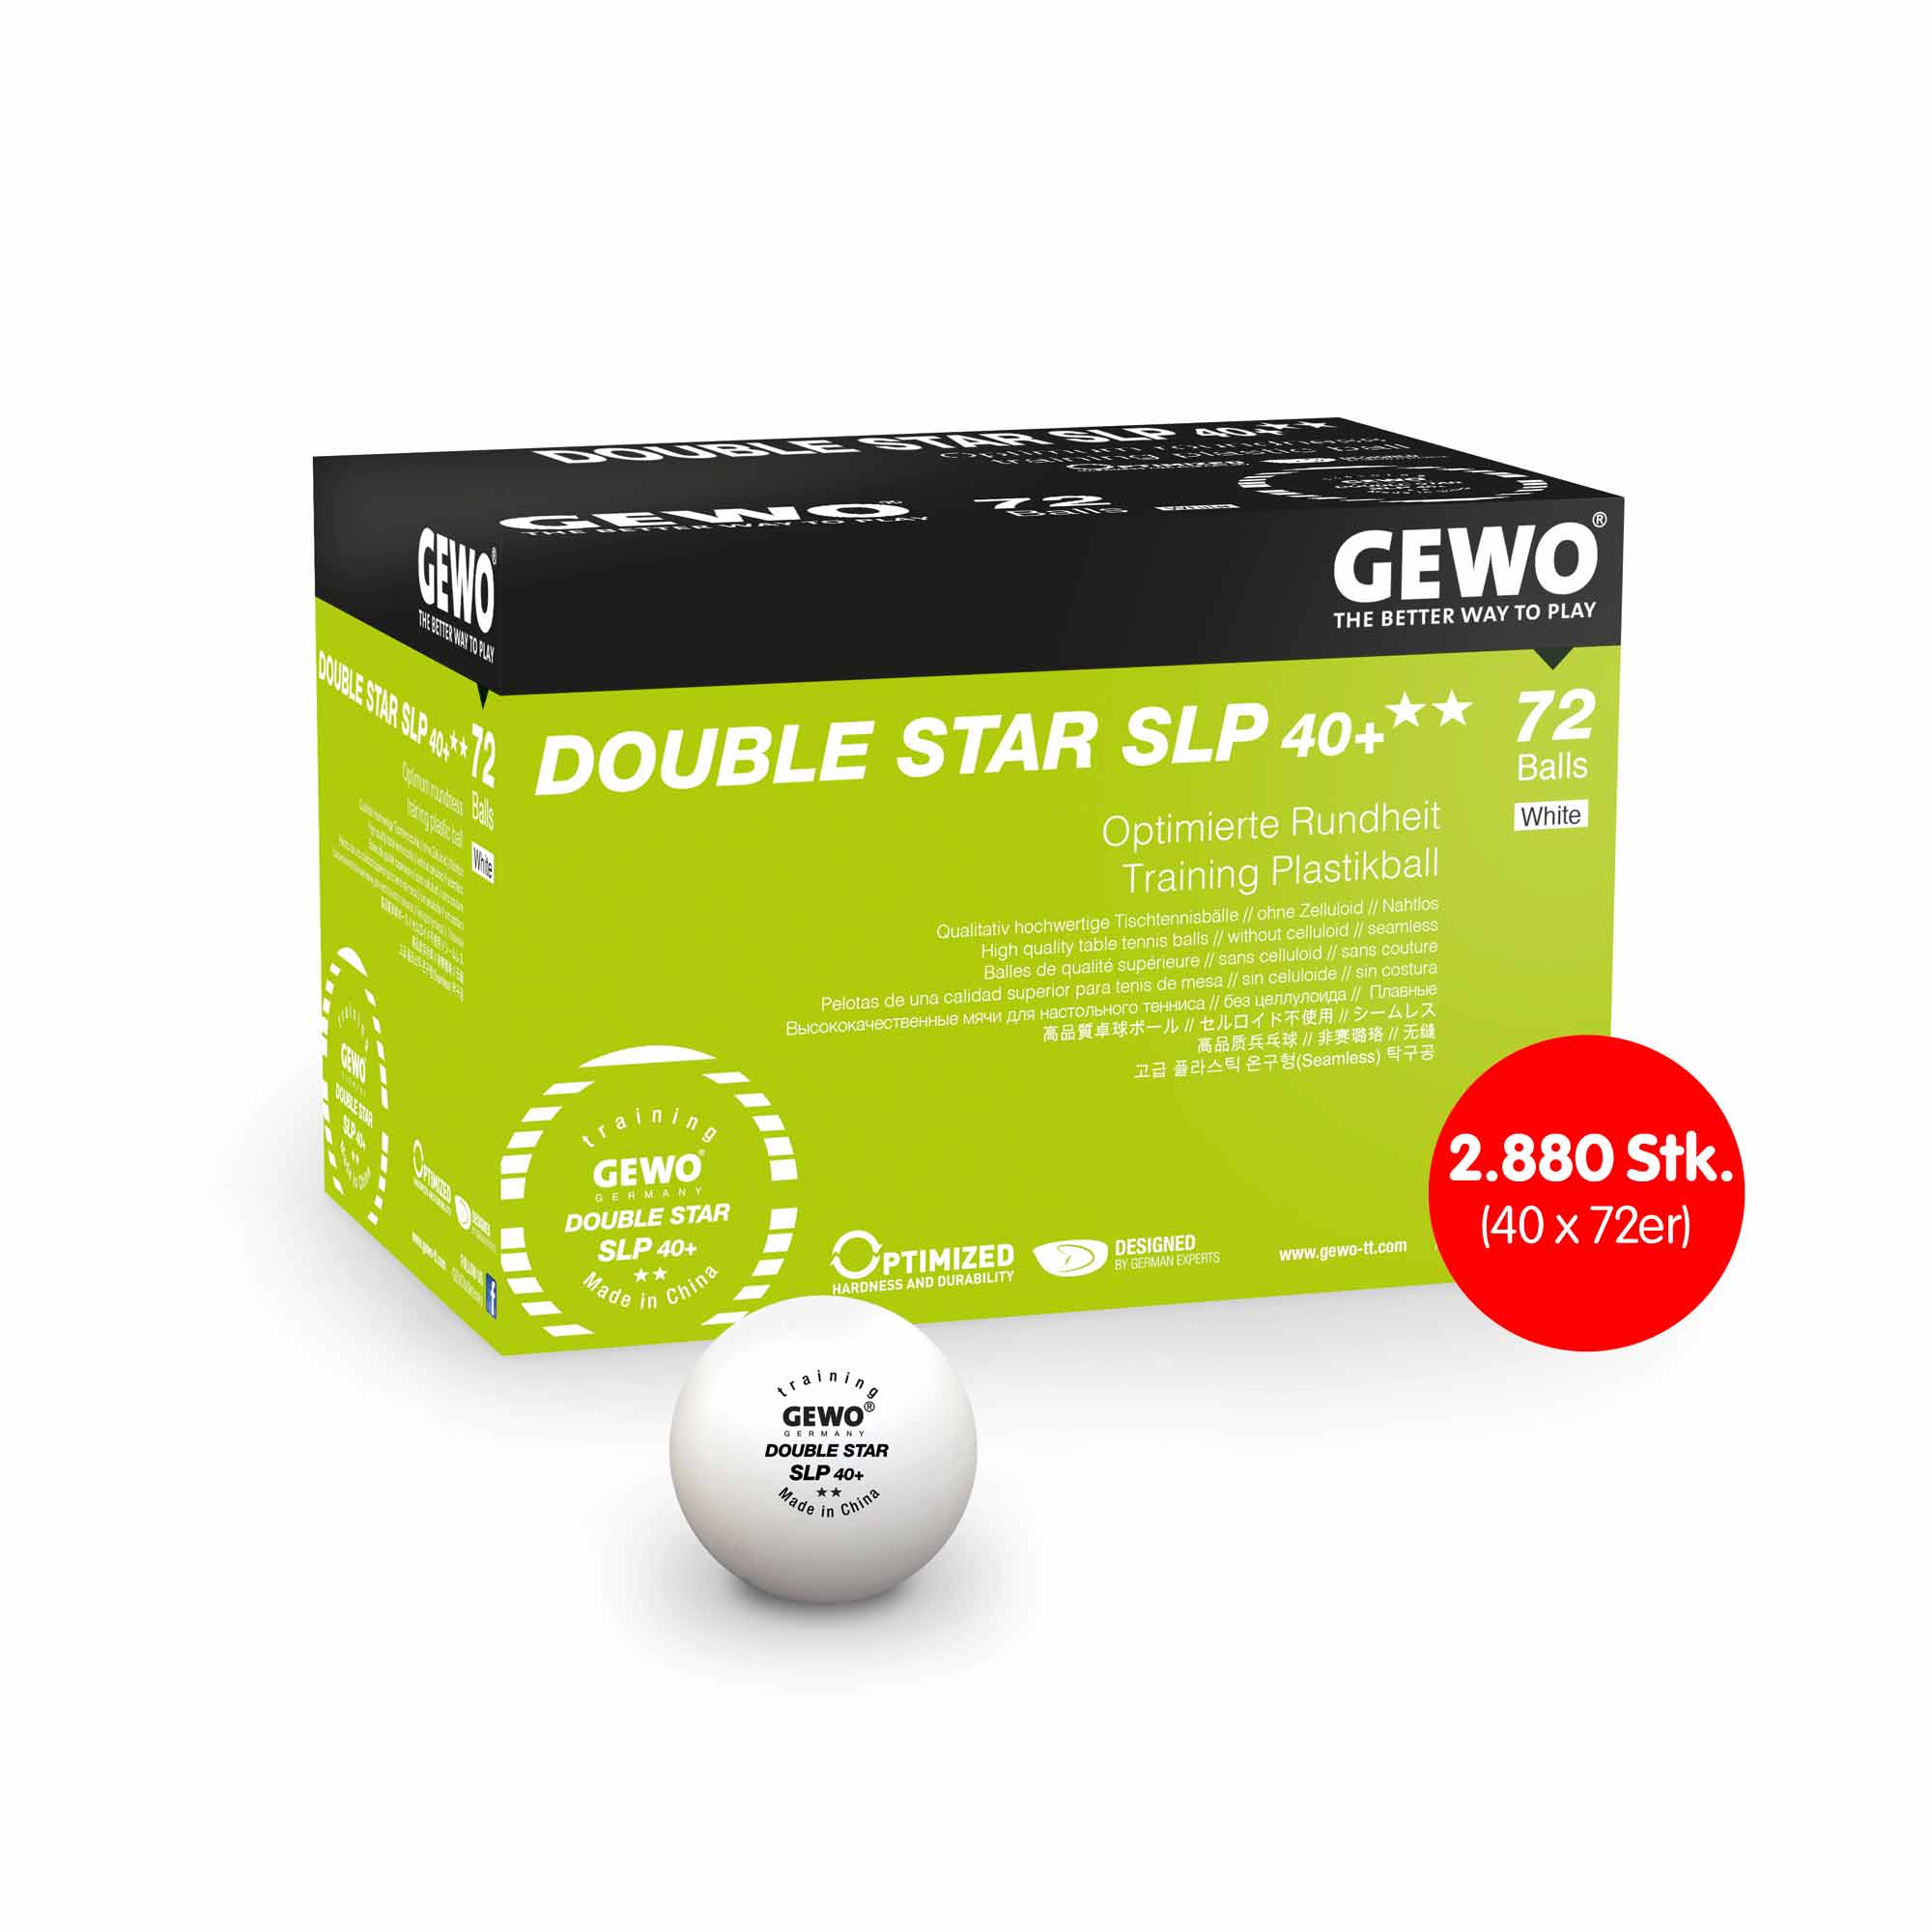 GEWO Ball Double Star SLP40+ 2880 Stk. (40 x 72er) weiß